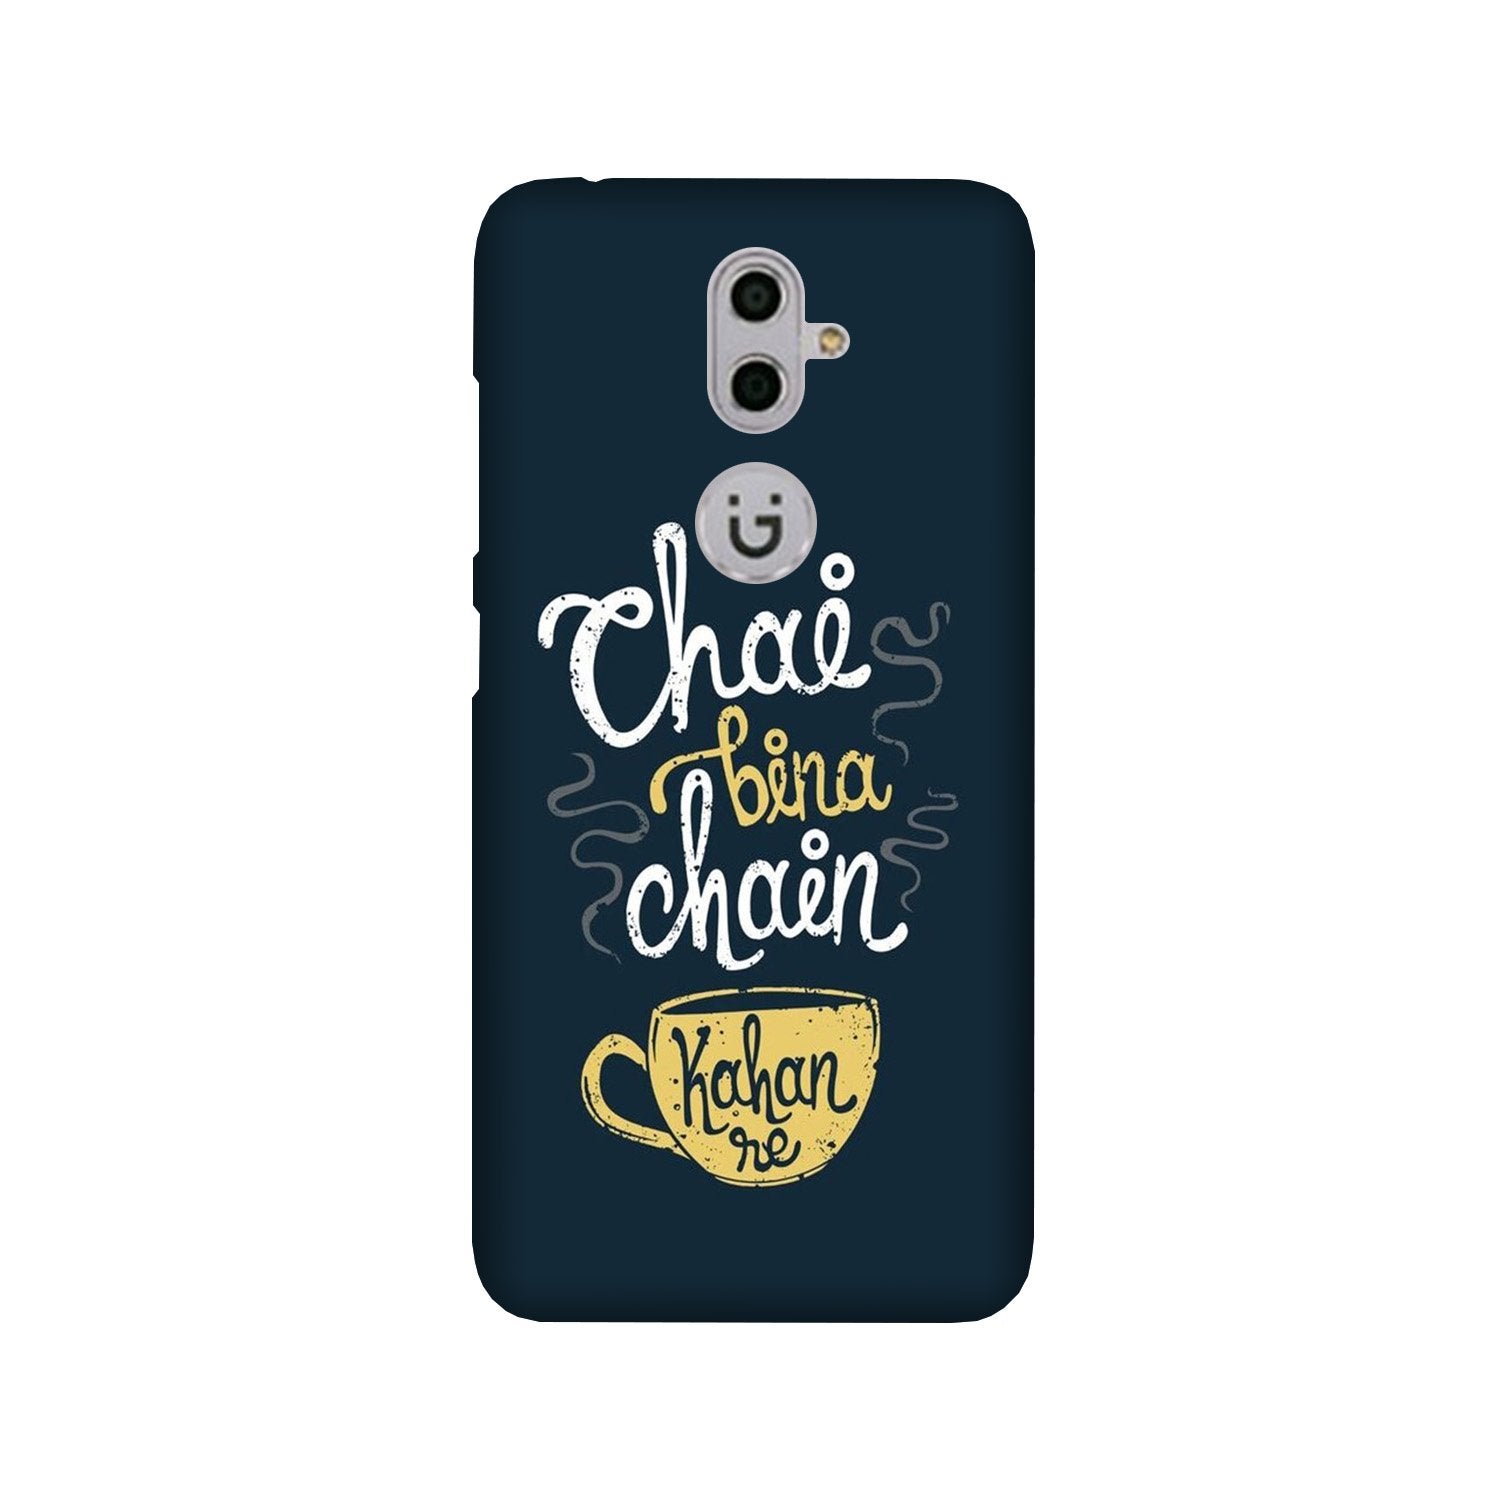 Chai Bina Chain Kahan Case for Gionee S9(Design - 144)